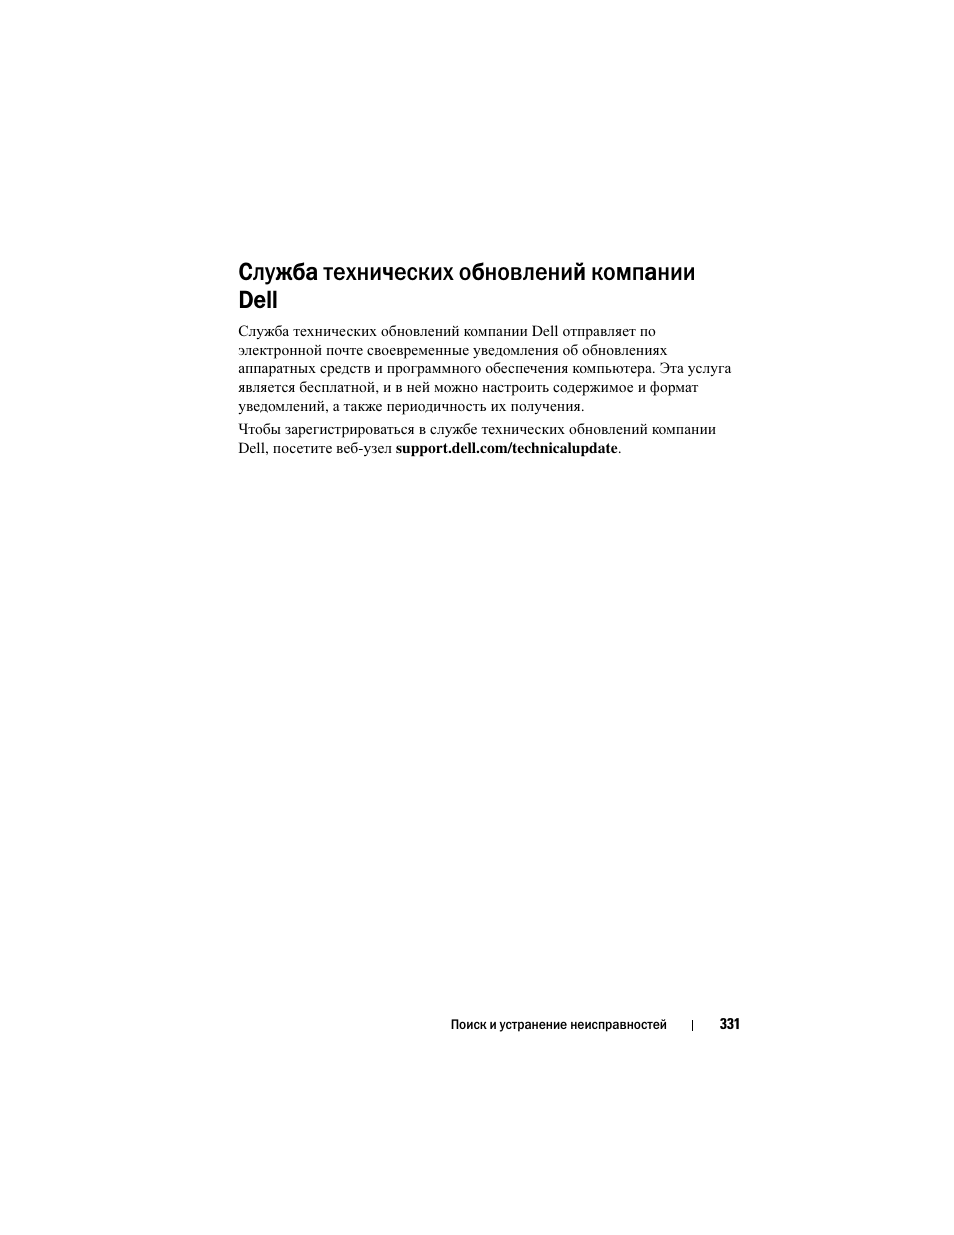 Служба технических обновлений компании dell | Инструкция по эксплуатации Dell Inspiron 560 | Страница 331 / 384